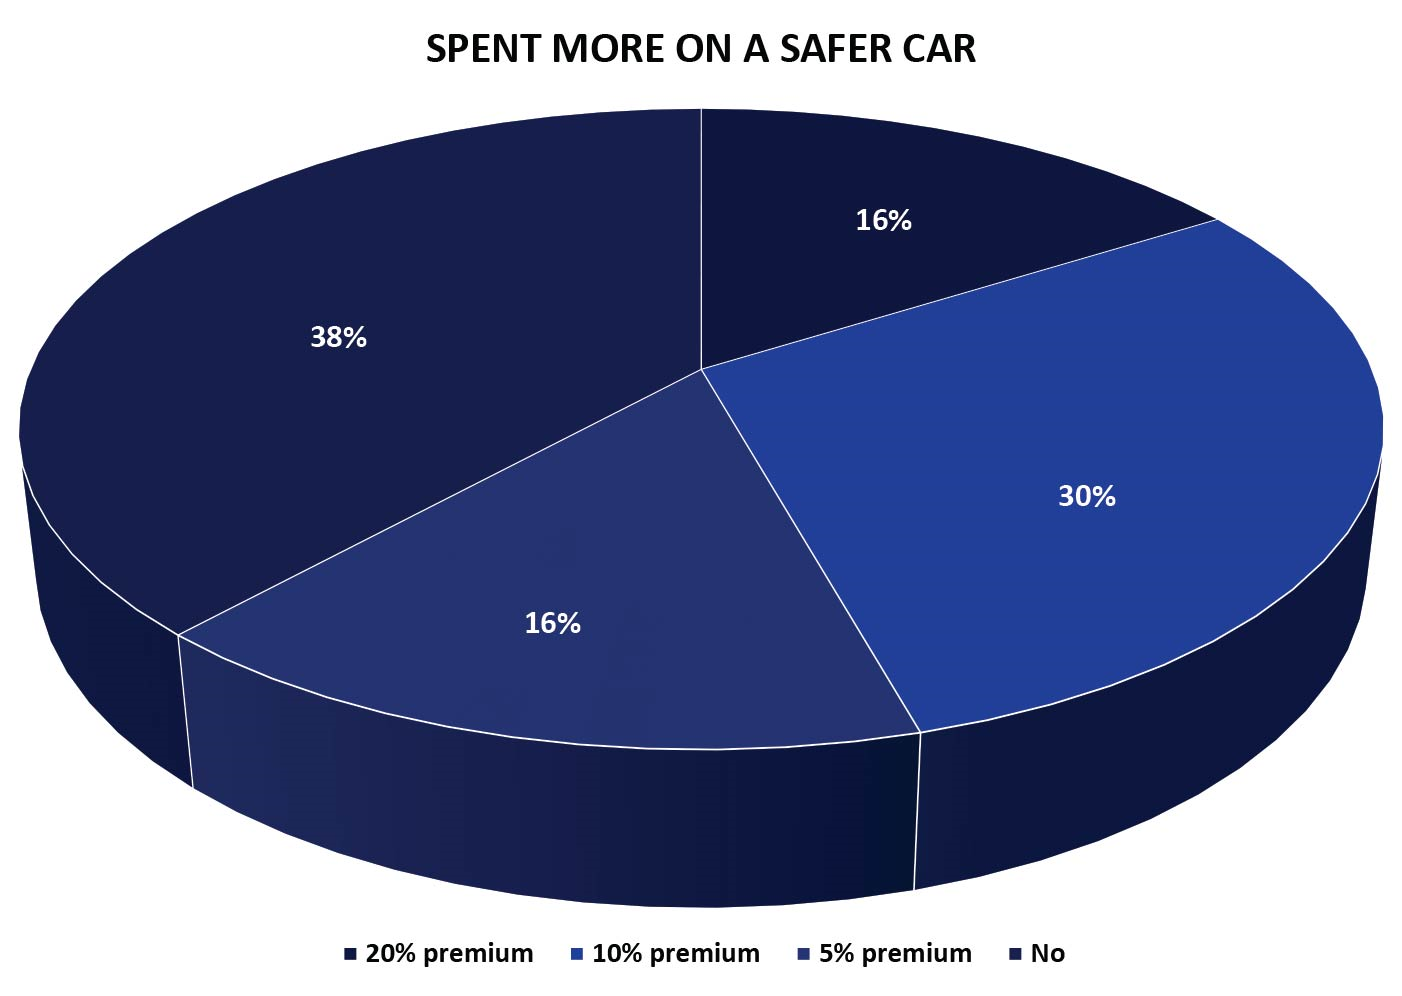 Spent More On a Safer Car in Brazil